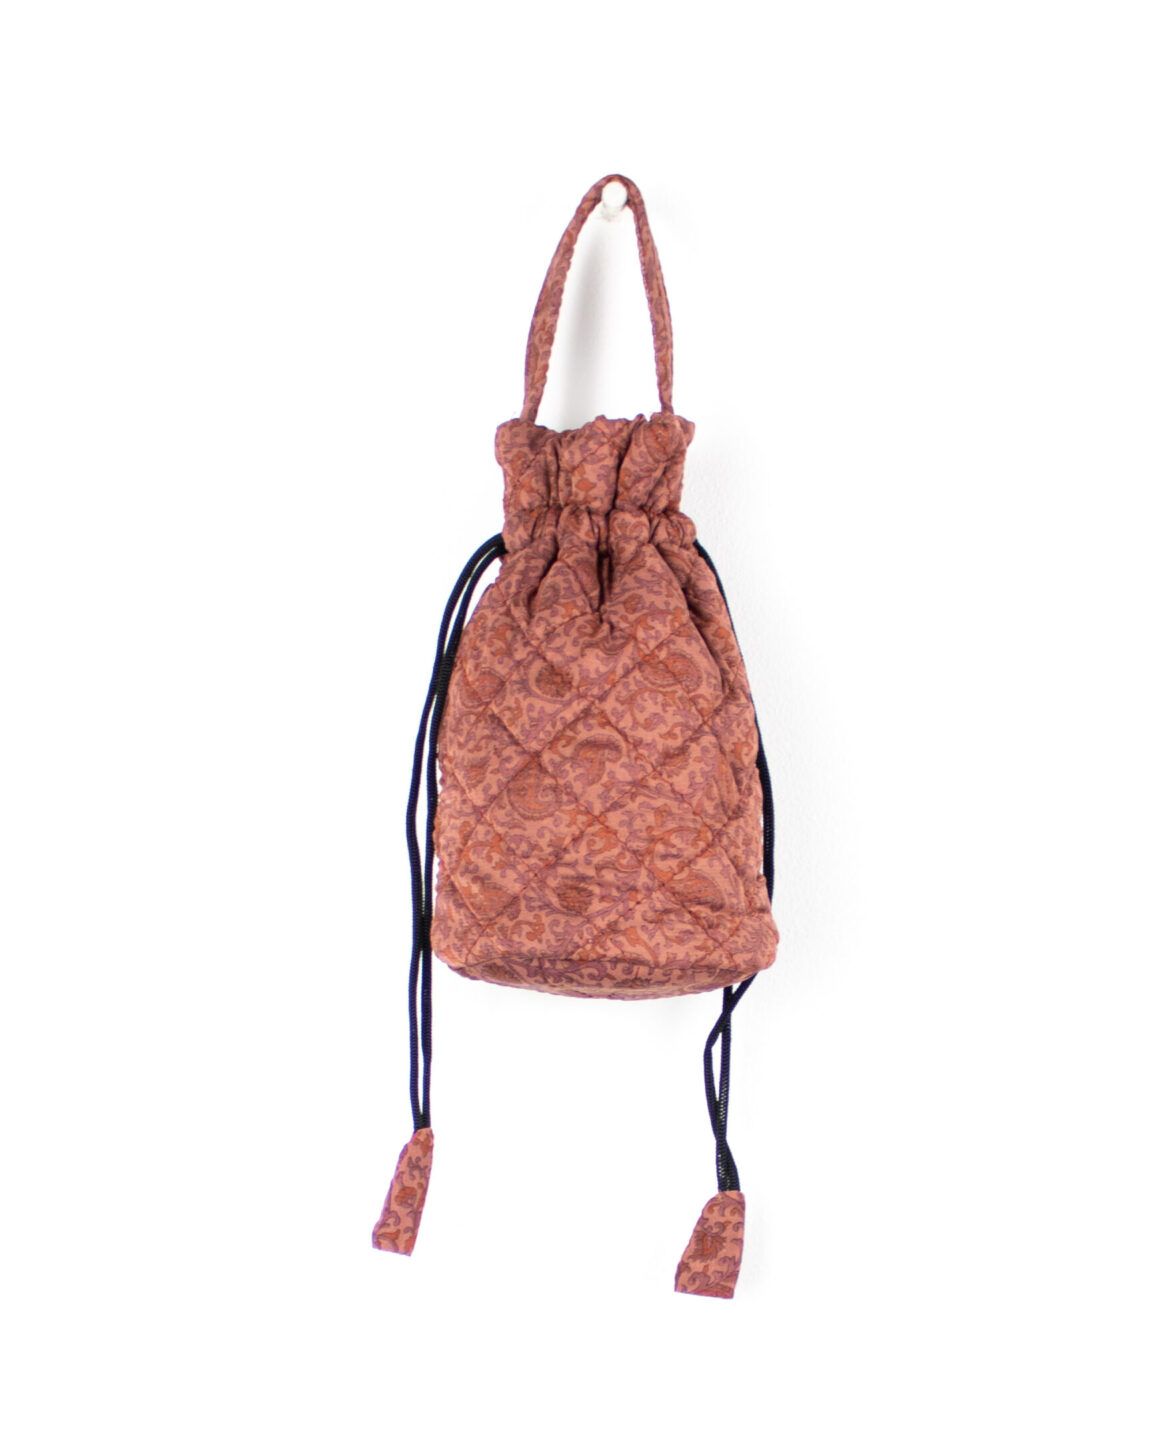 कपड़े के सिर्फ एक टुकड़े से बनाए बैग/easy handbag cutting and stitching/  zipper bag/lunch bag - YouTube